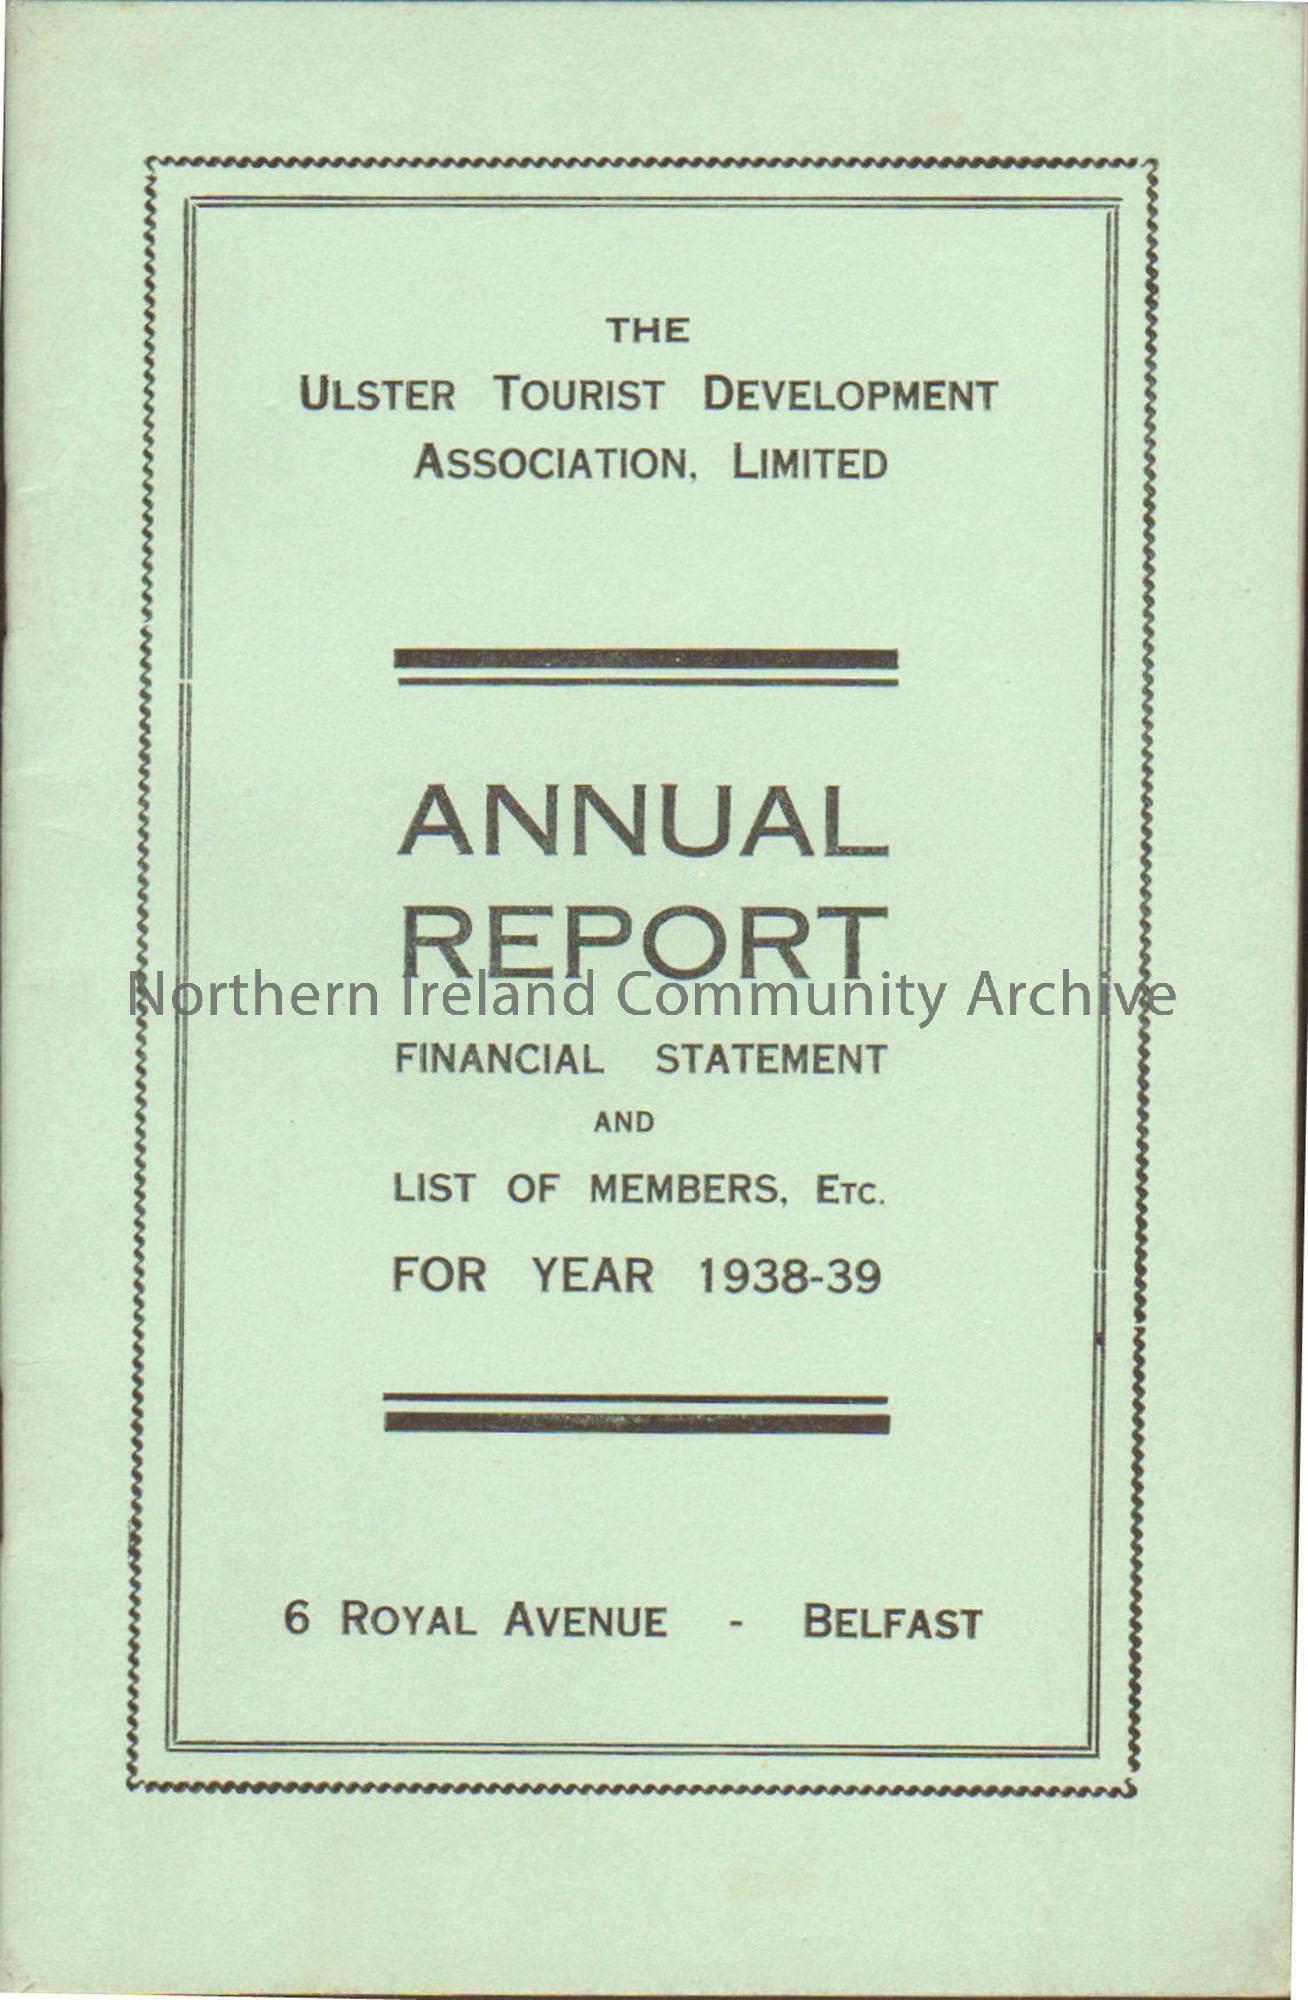 Ulster Tourist Development Association, Limited Annual Report 1938-39. Light green booklet